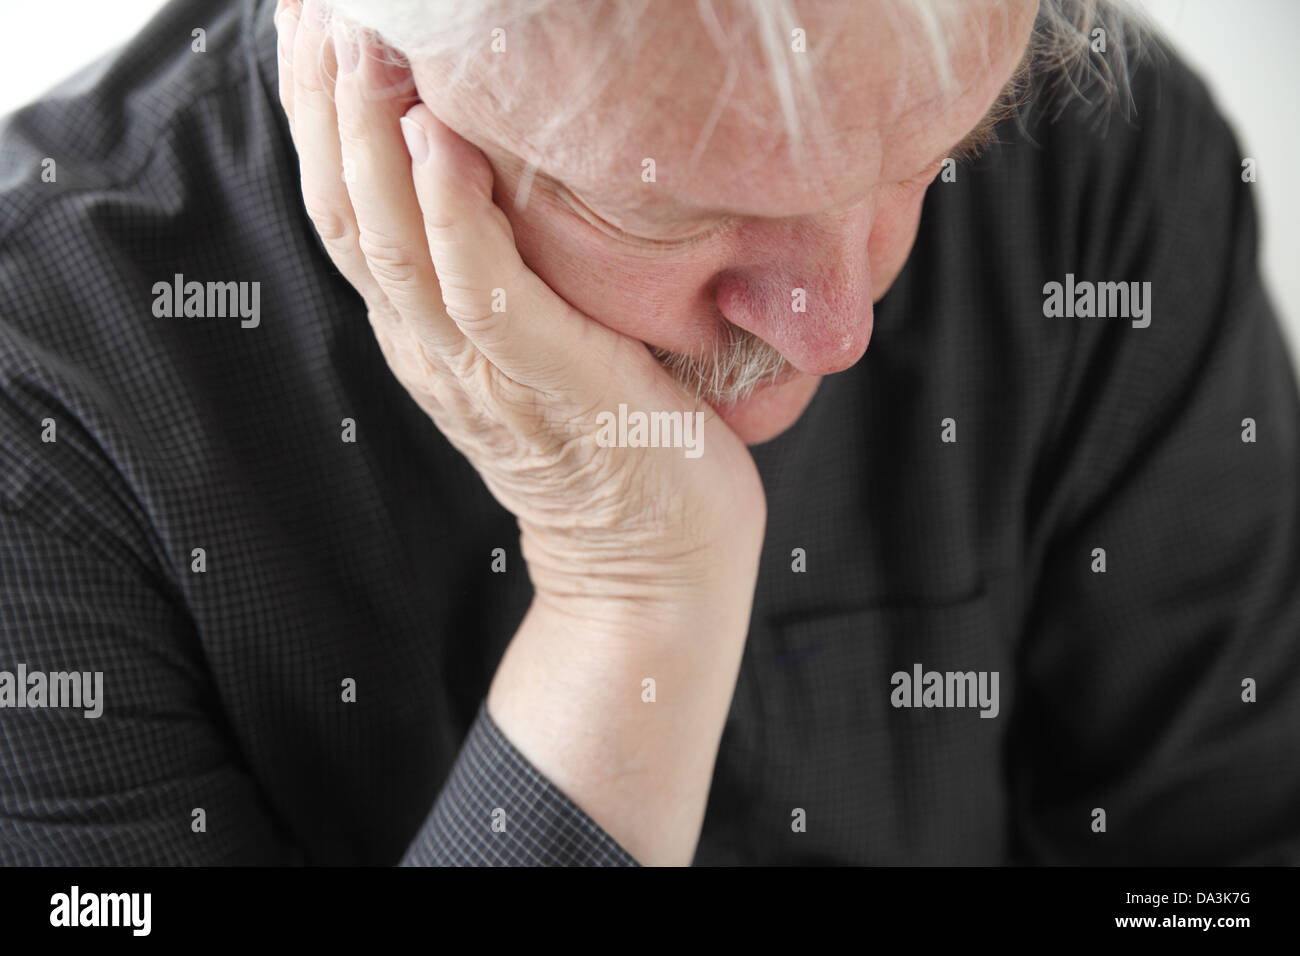 older man slumped in depression or grief Stock Photo